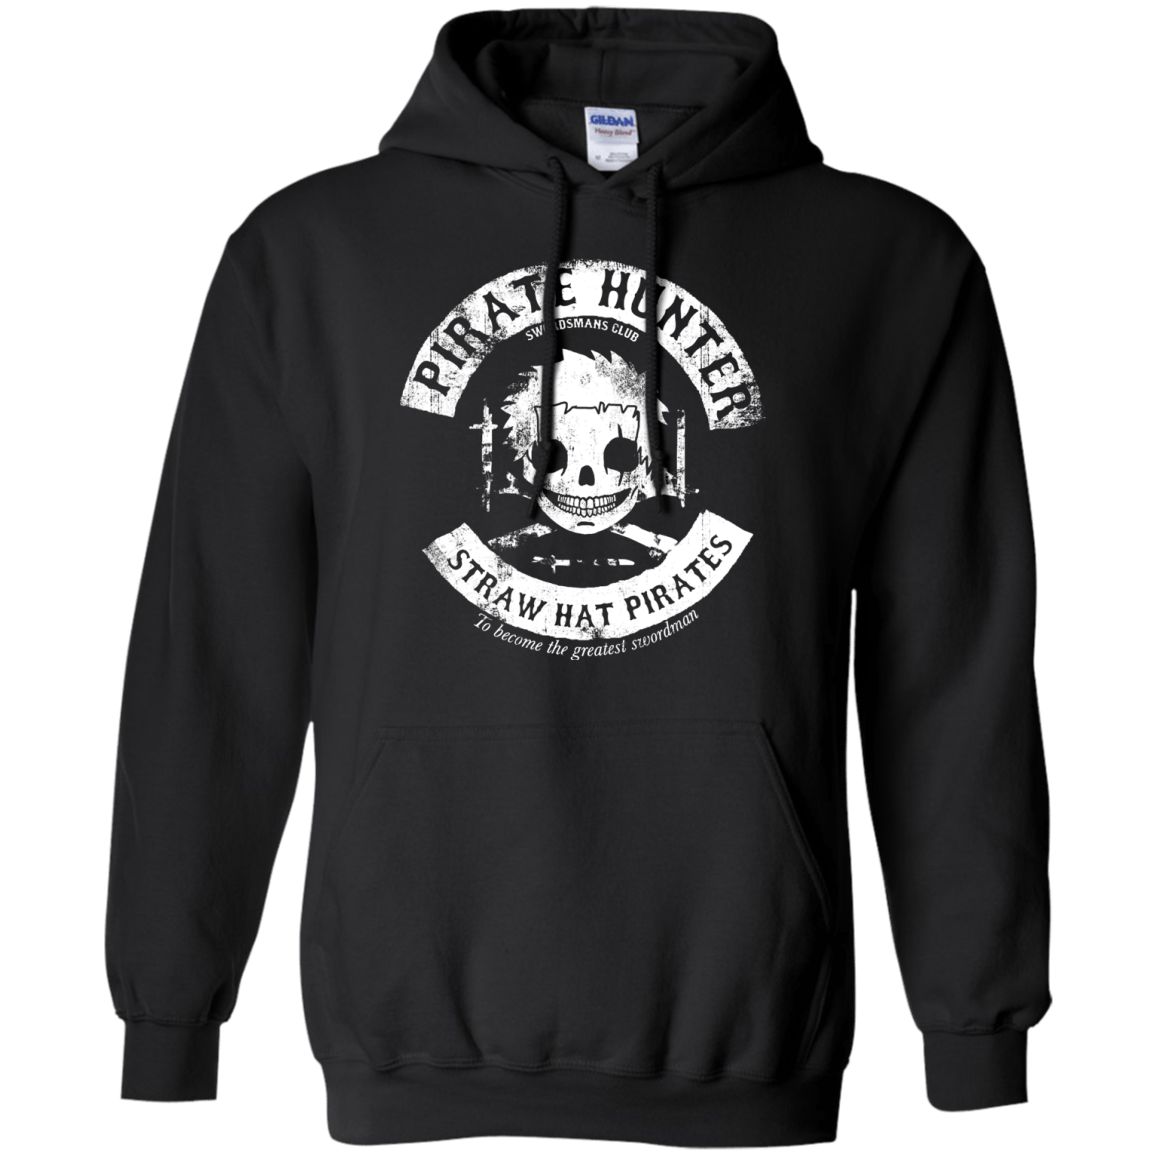 Sweatshirts Black / S Pirate Hunter Skull Pullover Hoodie